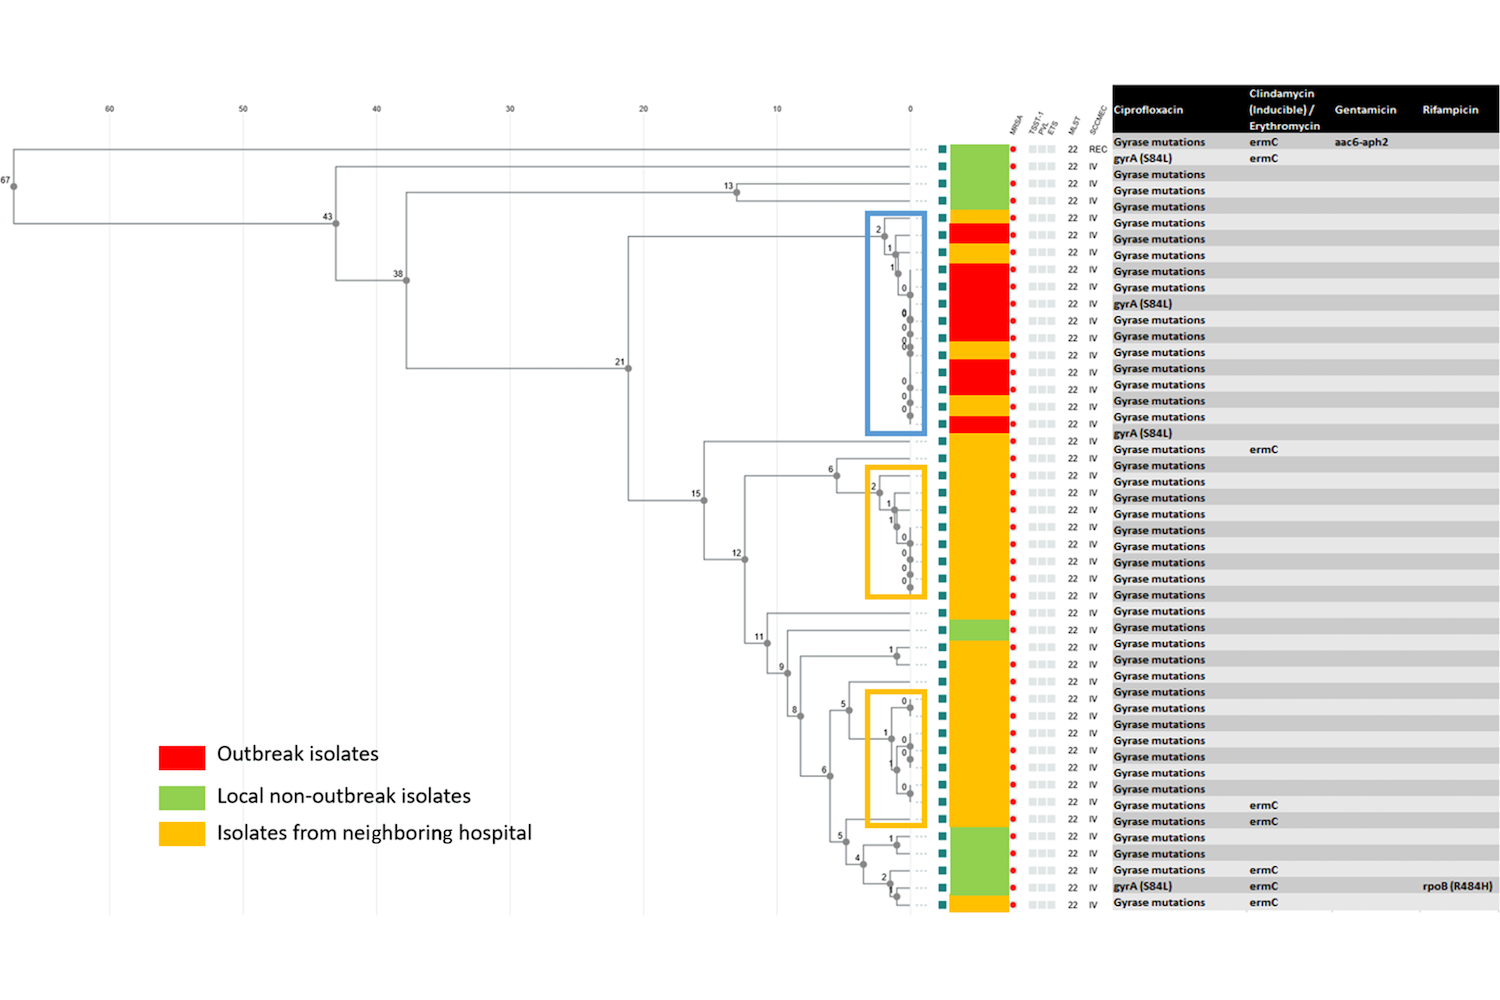 cgMLST phylogenetic tree